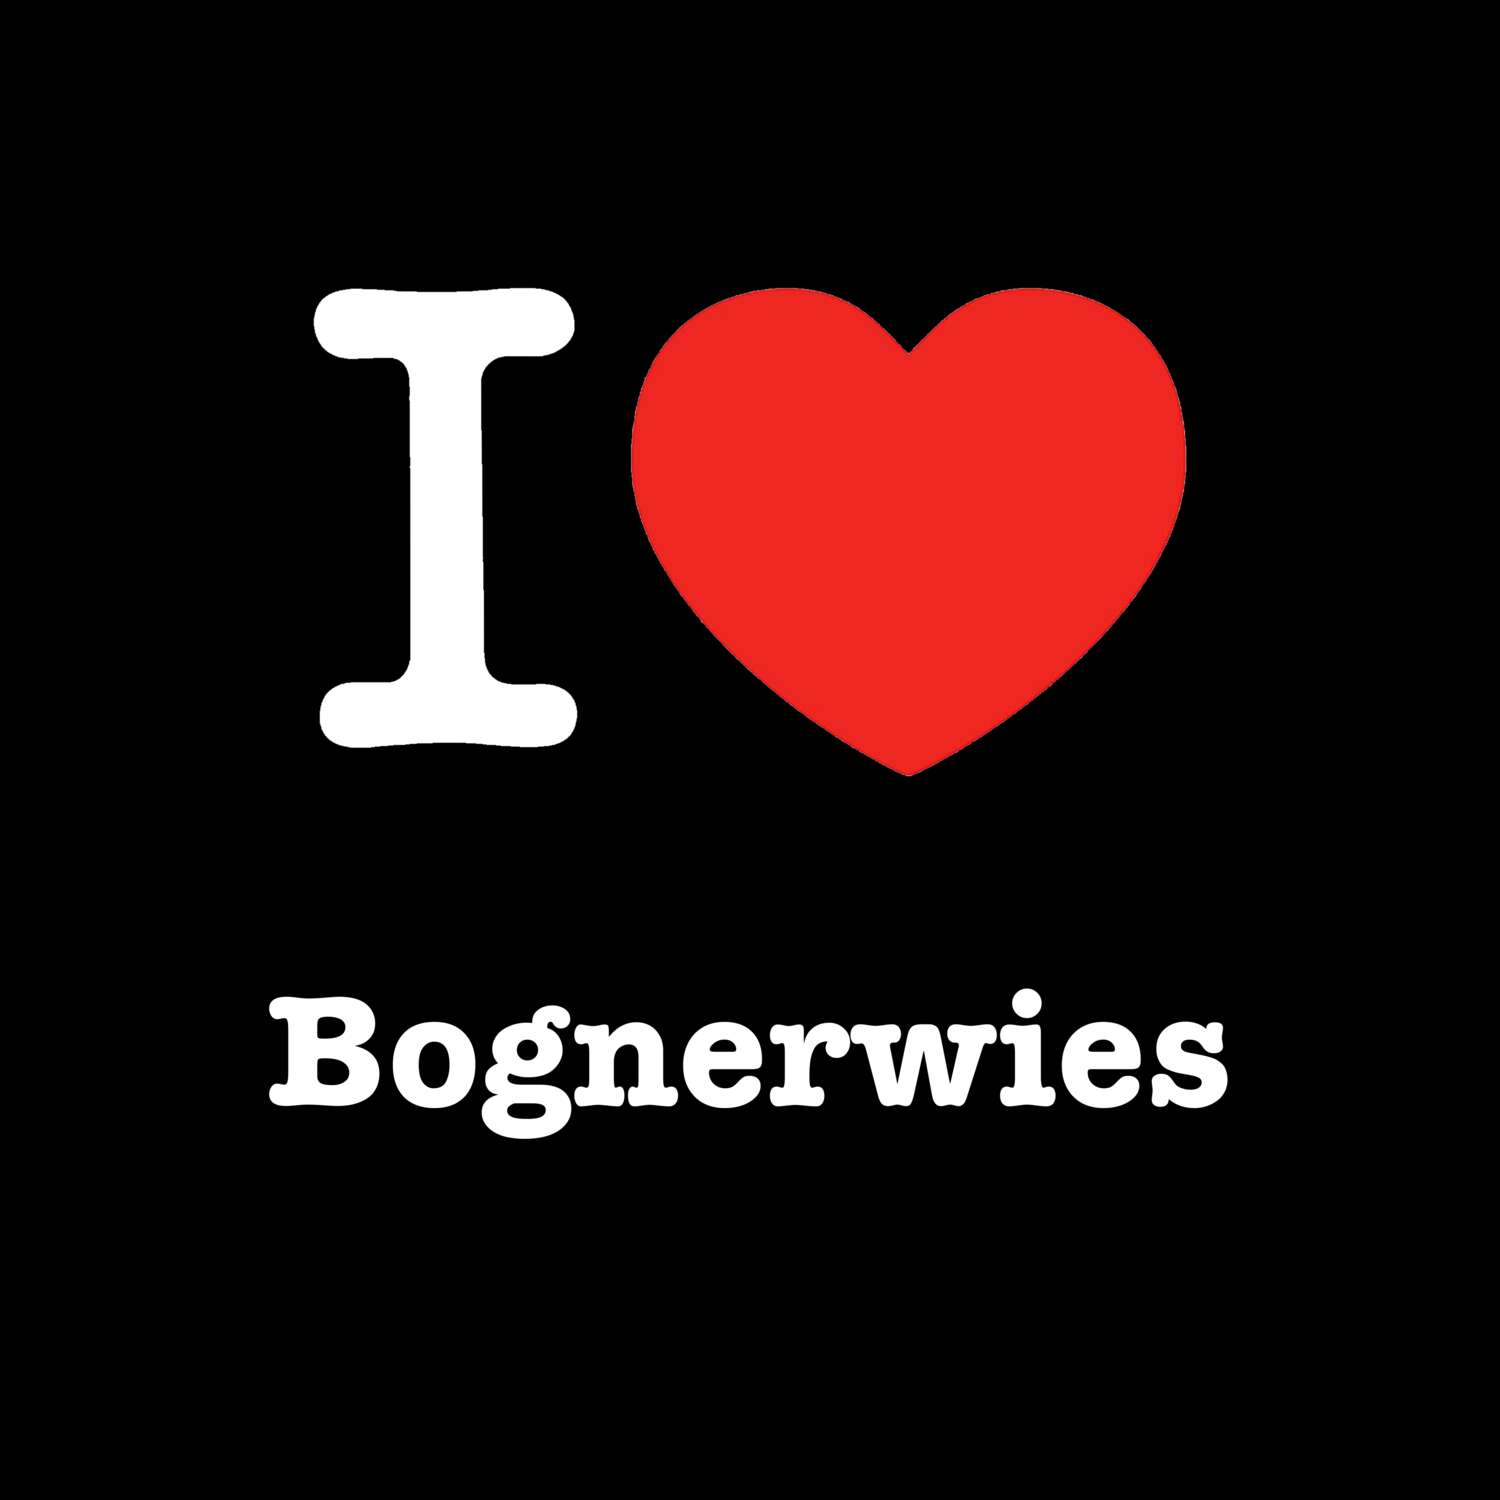 Bognerwies T-Shirt »I love«